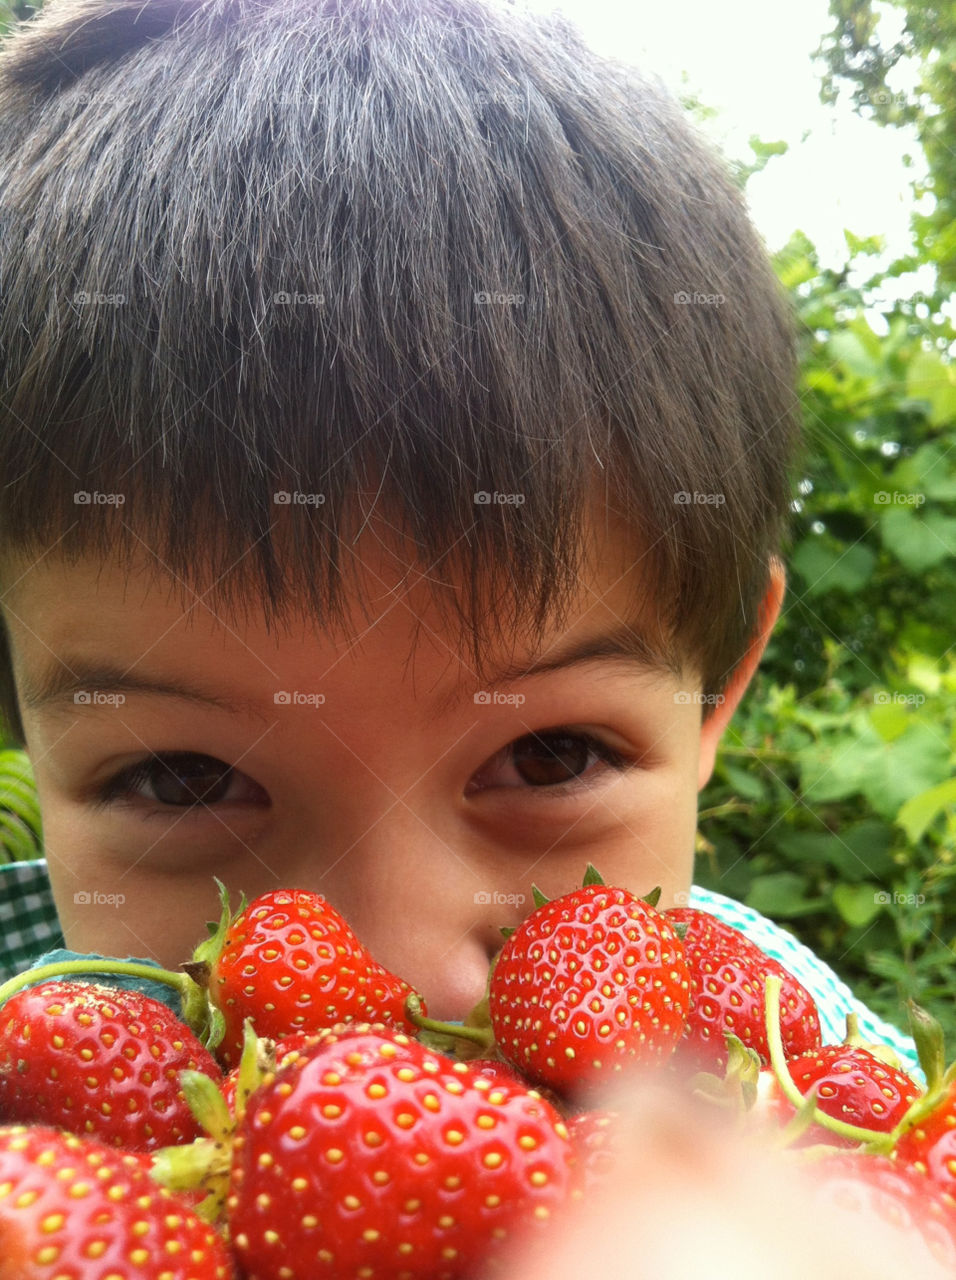 massachusetts kid strawberries sunshine by sydney428